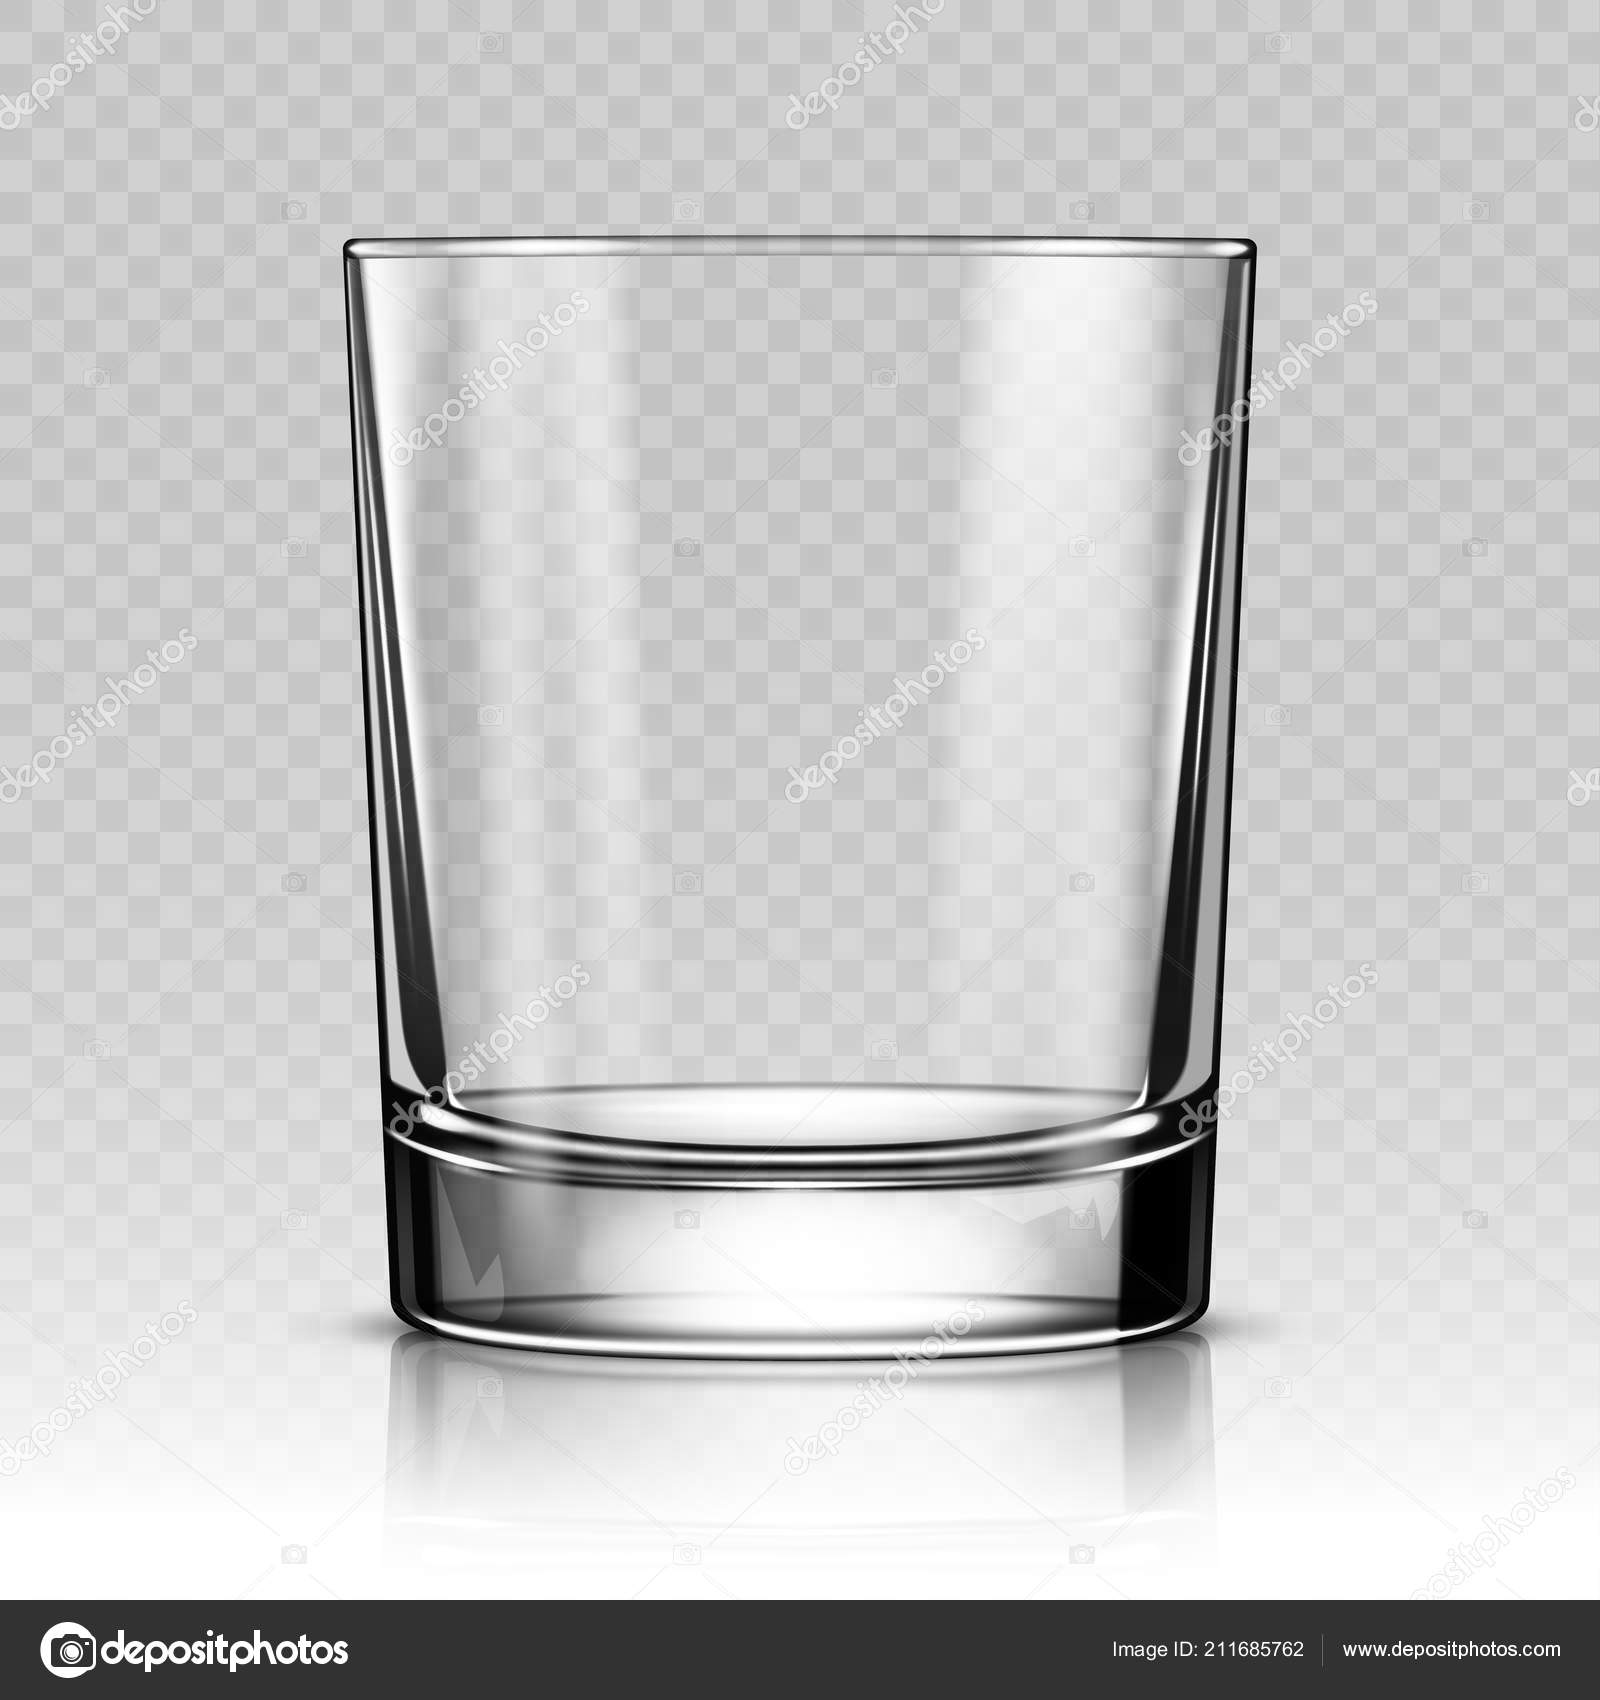 https://st4.depositphotos.com/1001335/21168/v/1600/depositphotos_211685762-stock-illustration-realistic-glass-cup-isolated-transparent.jpg